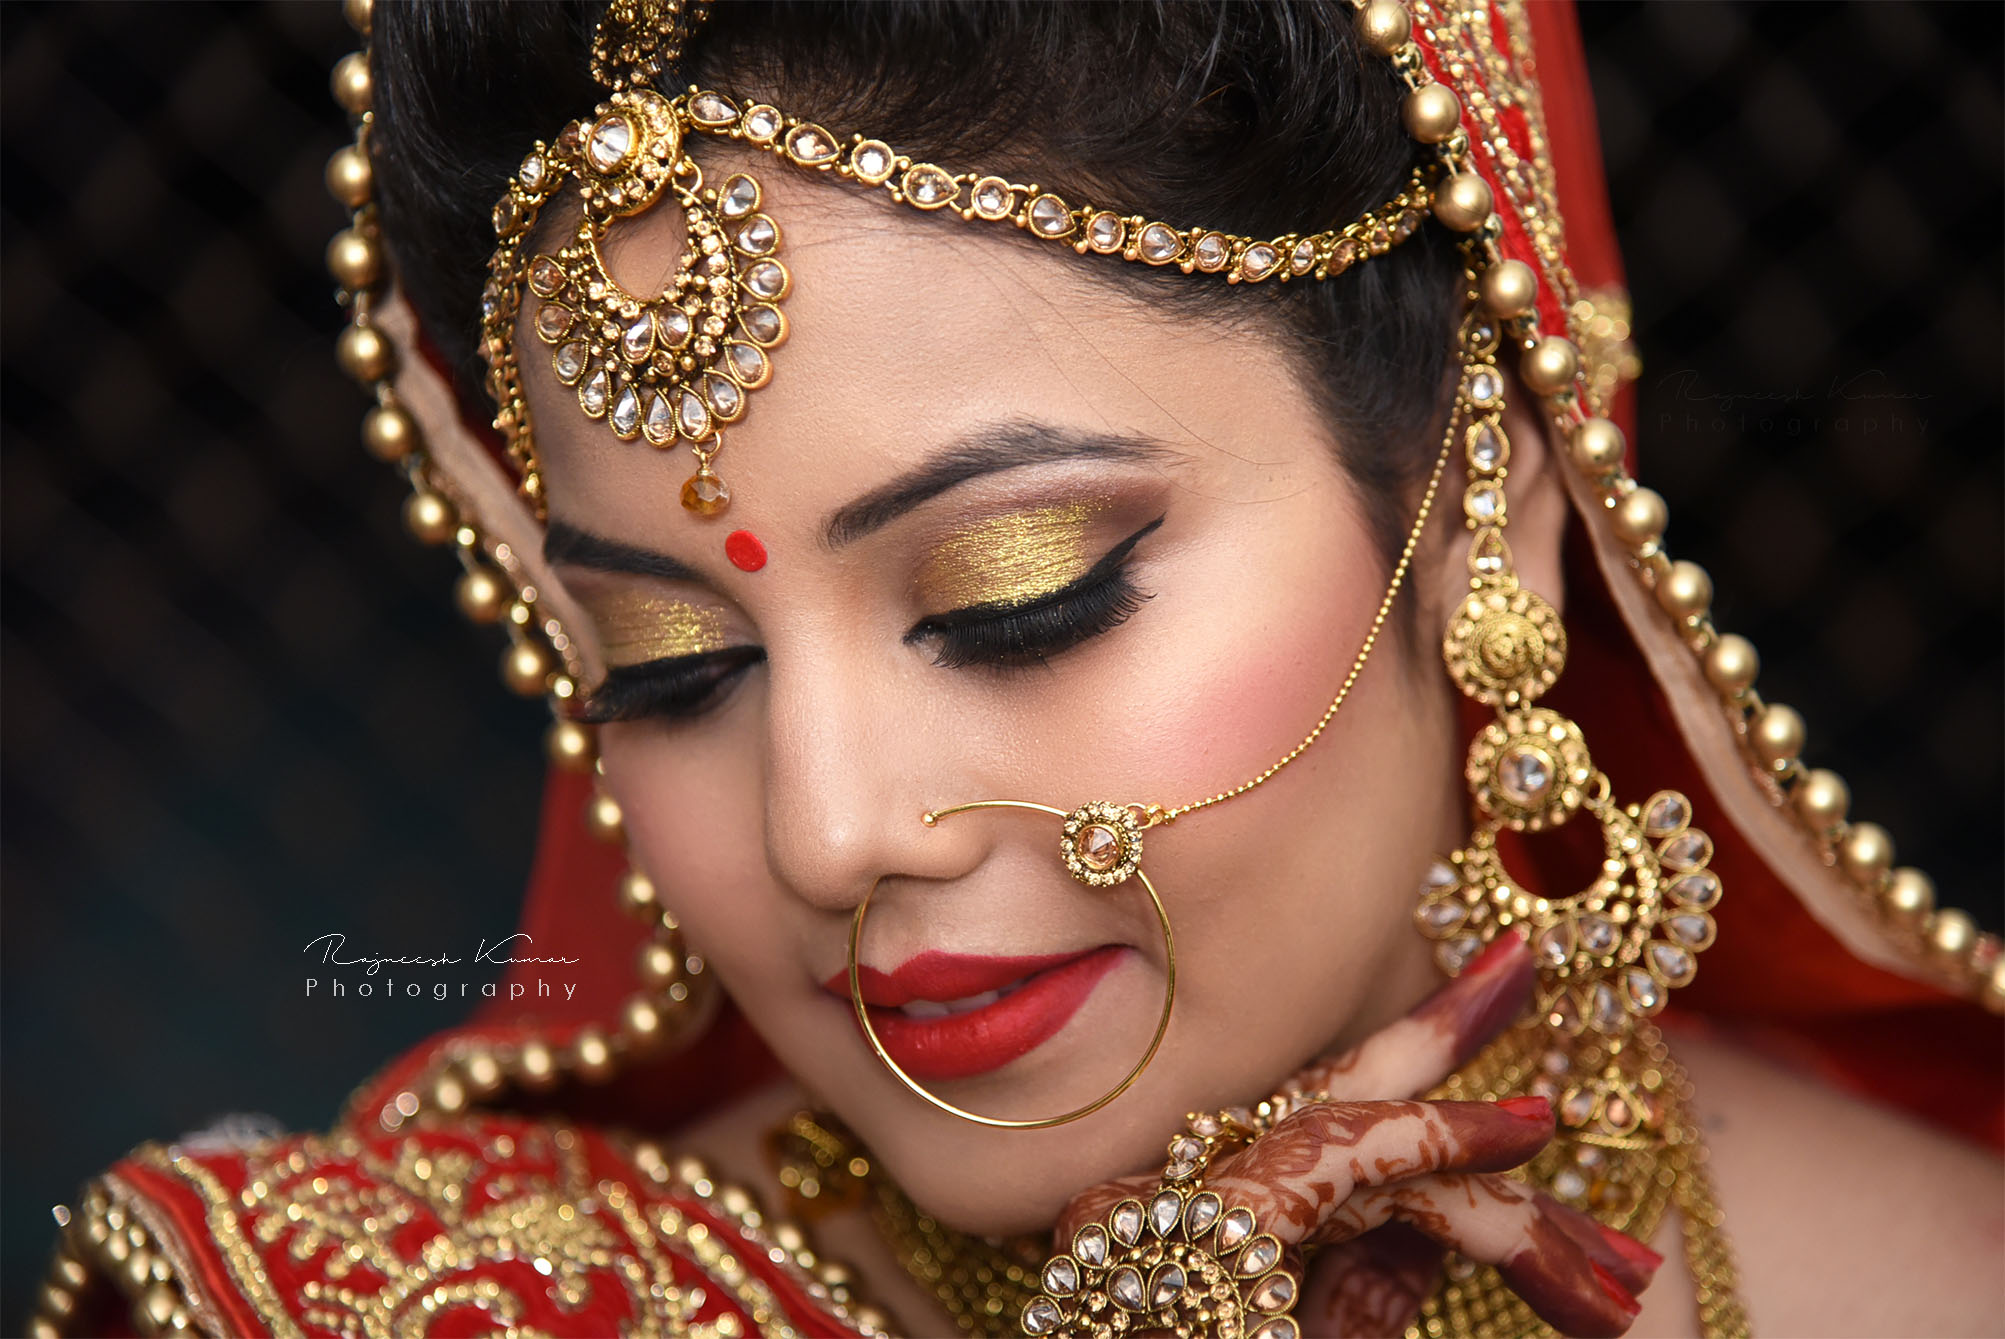 The Indian Bride – Rajneesh Photography